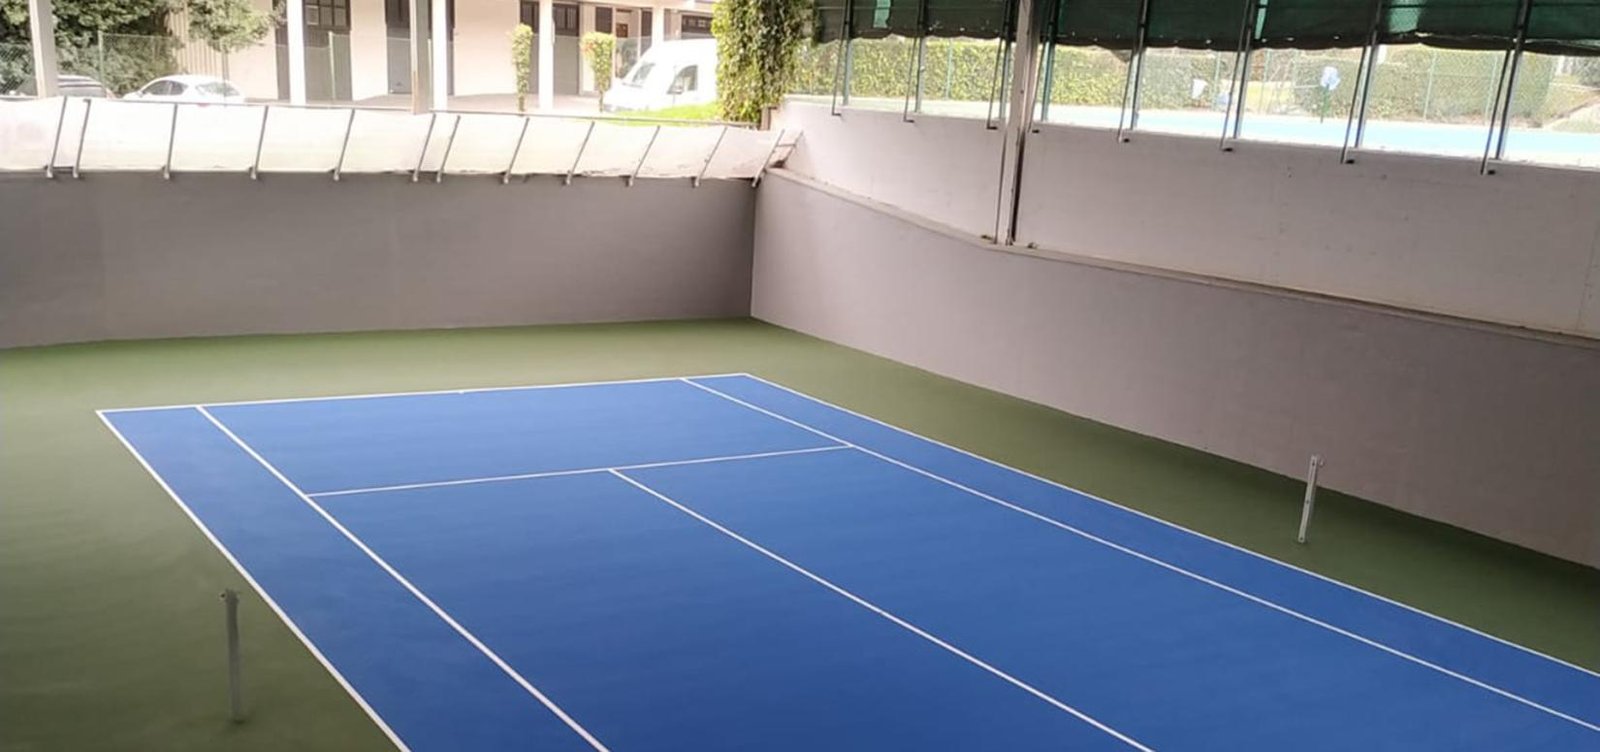 Atletic Tennis Club,  San Sebastian - Tennis court installation 05